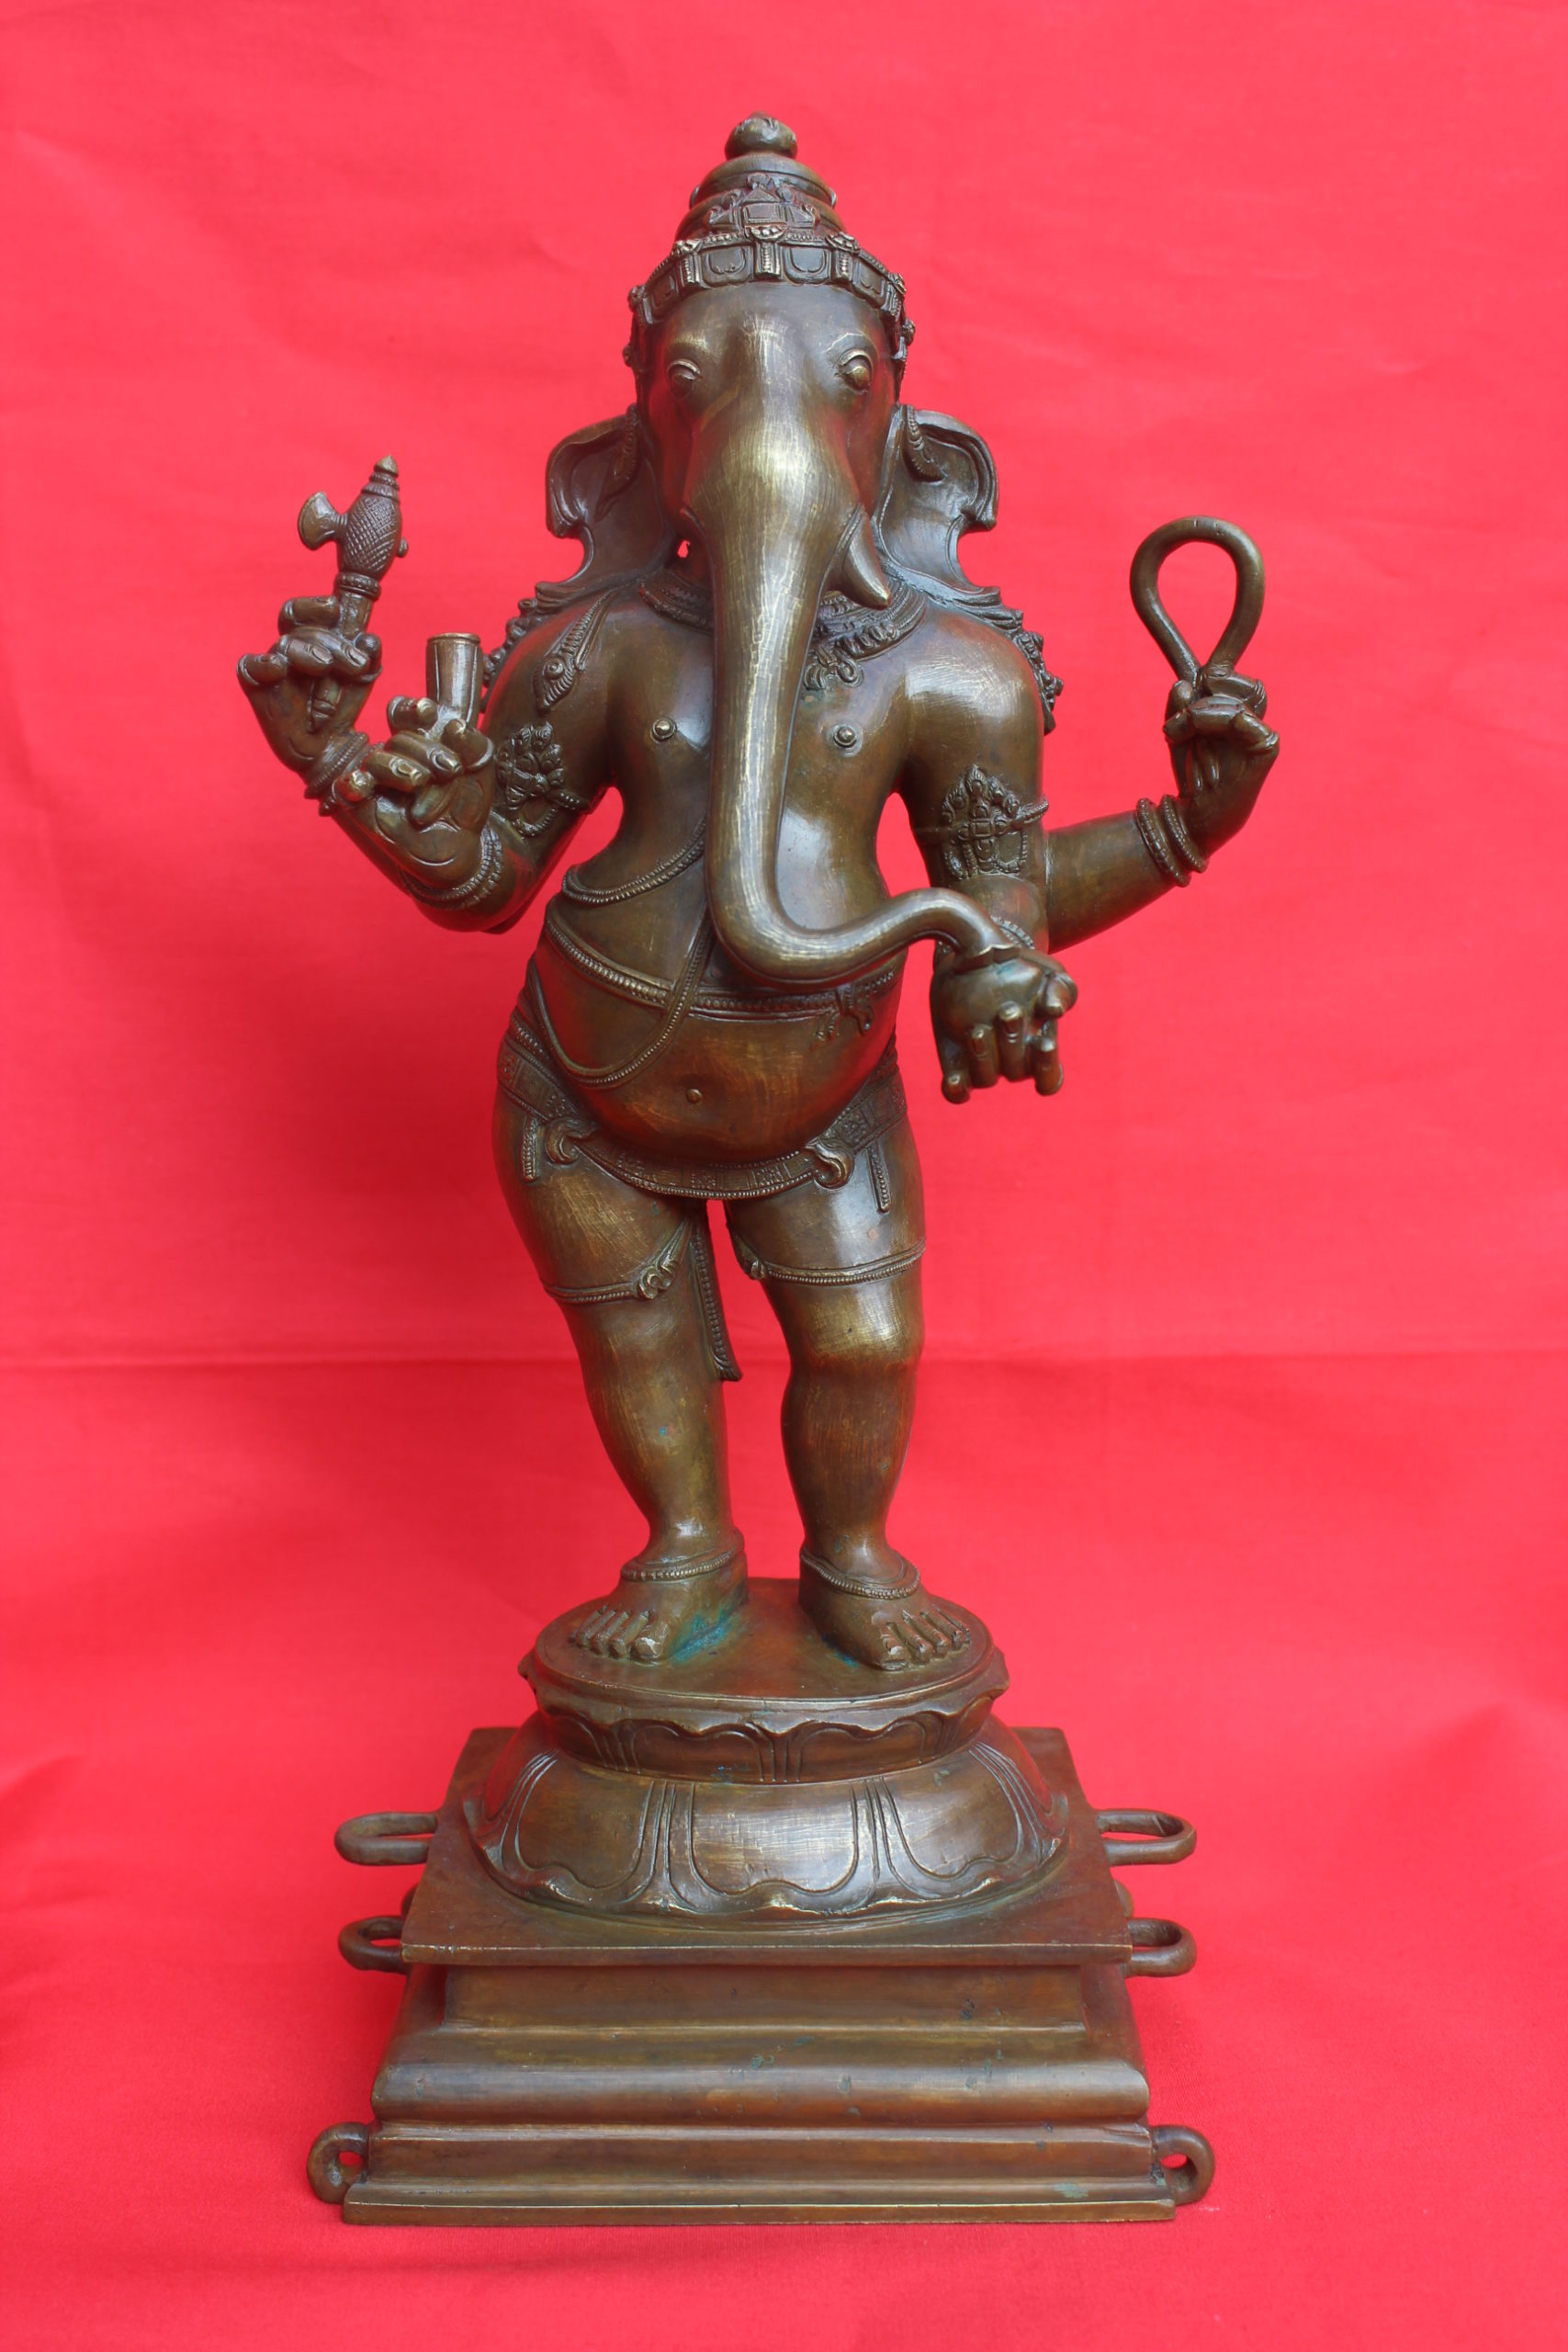 Different Poses of God Ganesha Murti | भगवान गणेश की विभिन्न मुद्राएँ